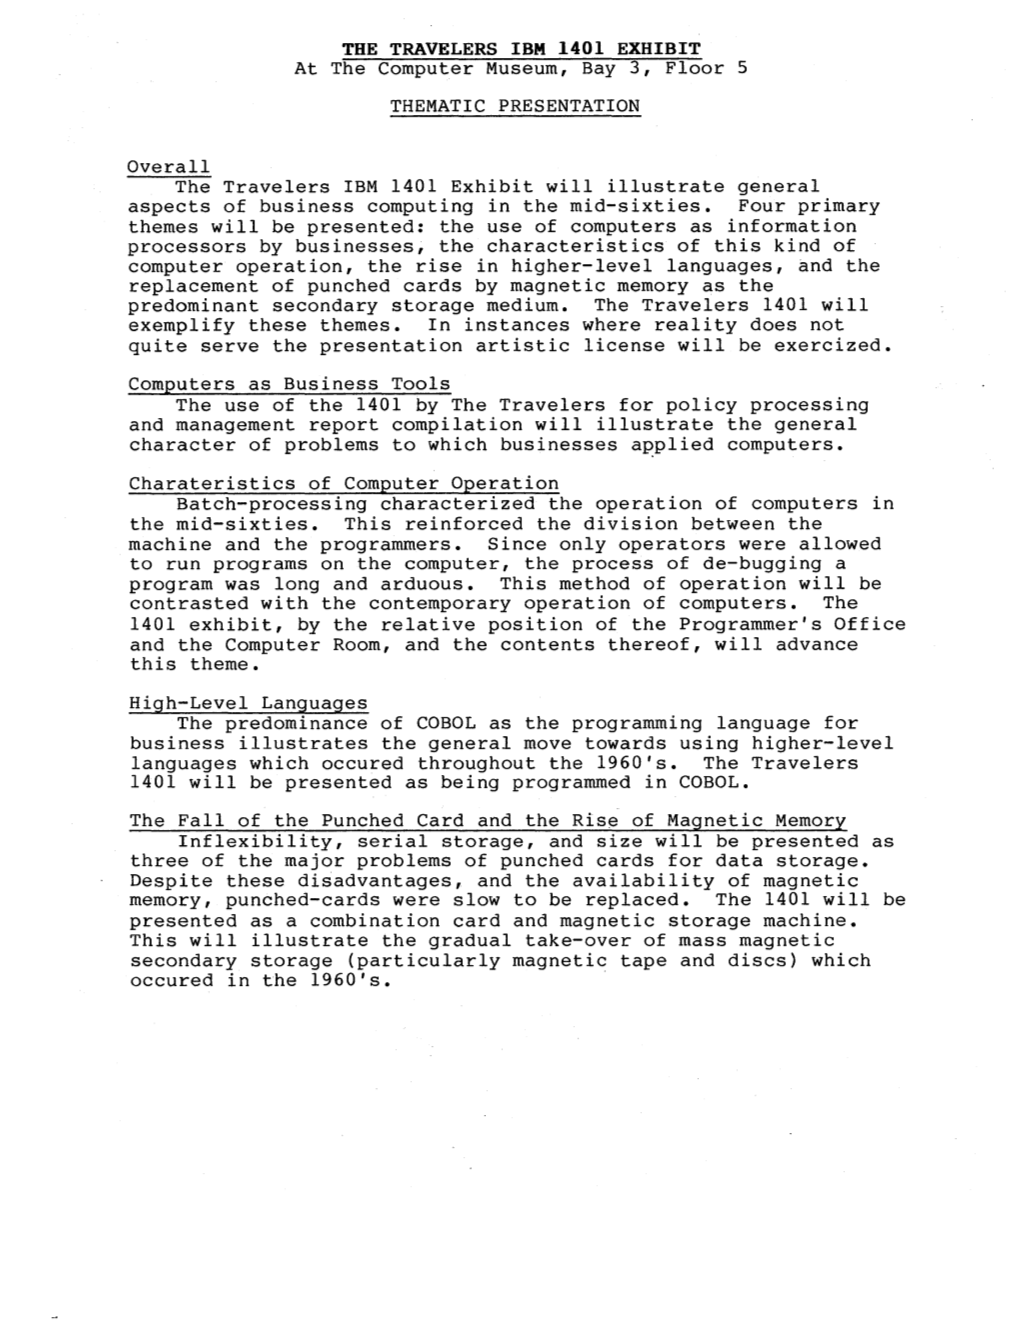 The Travelers IBM 1401 Exhibit Thematic Presentation, June 1984